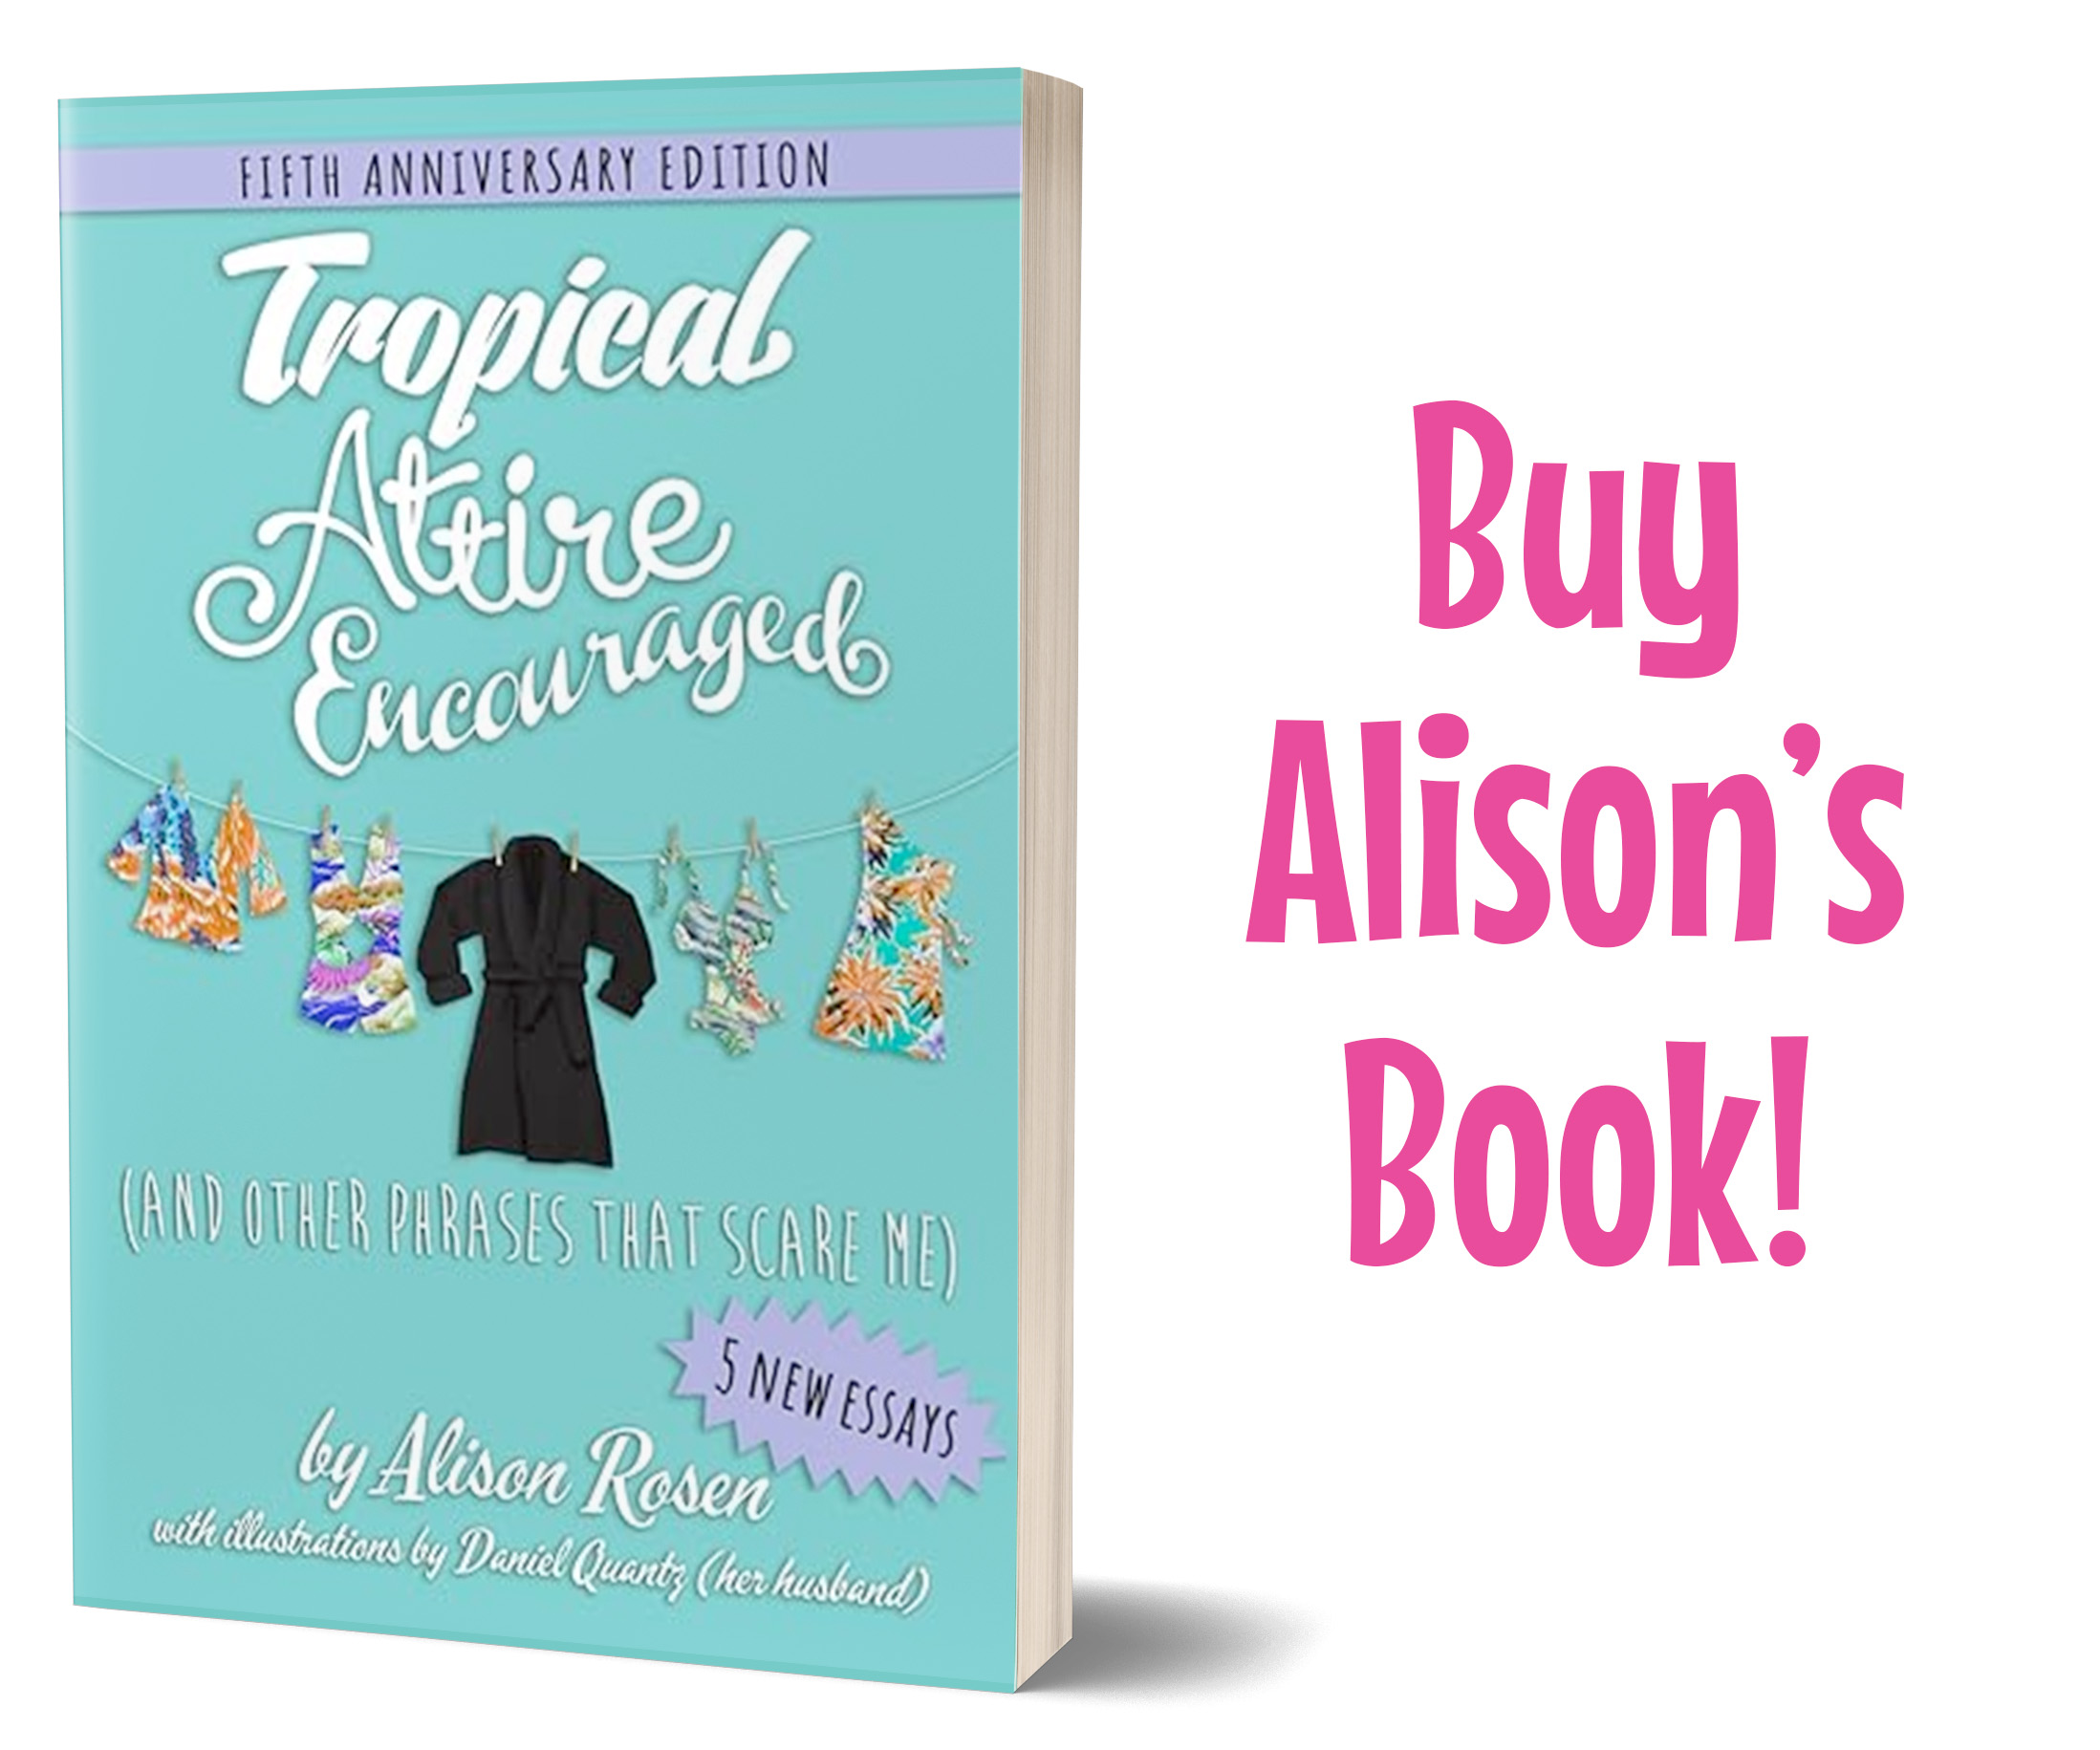 Buy Alison's New Book